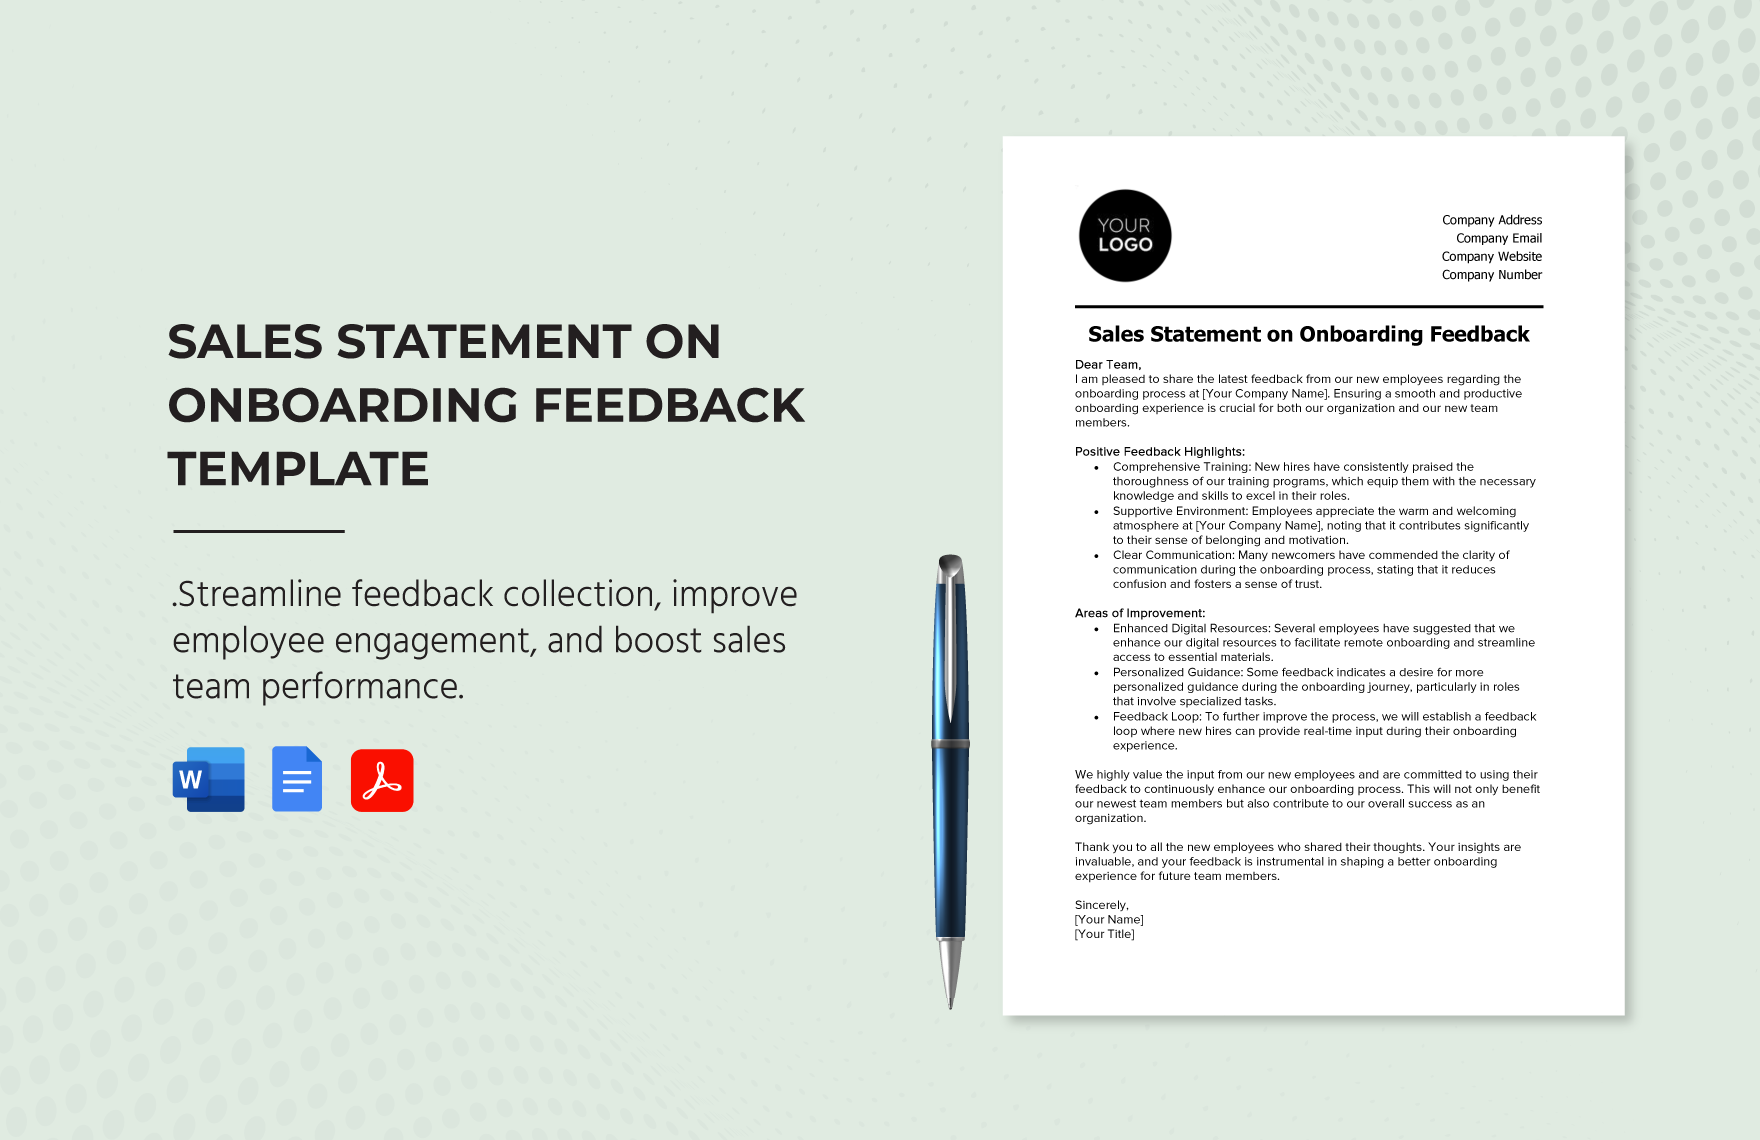 Sales Statement on Onboarding Feedback Template in Word, Google Docs, PDF